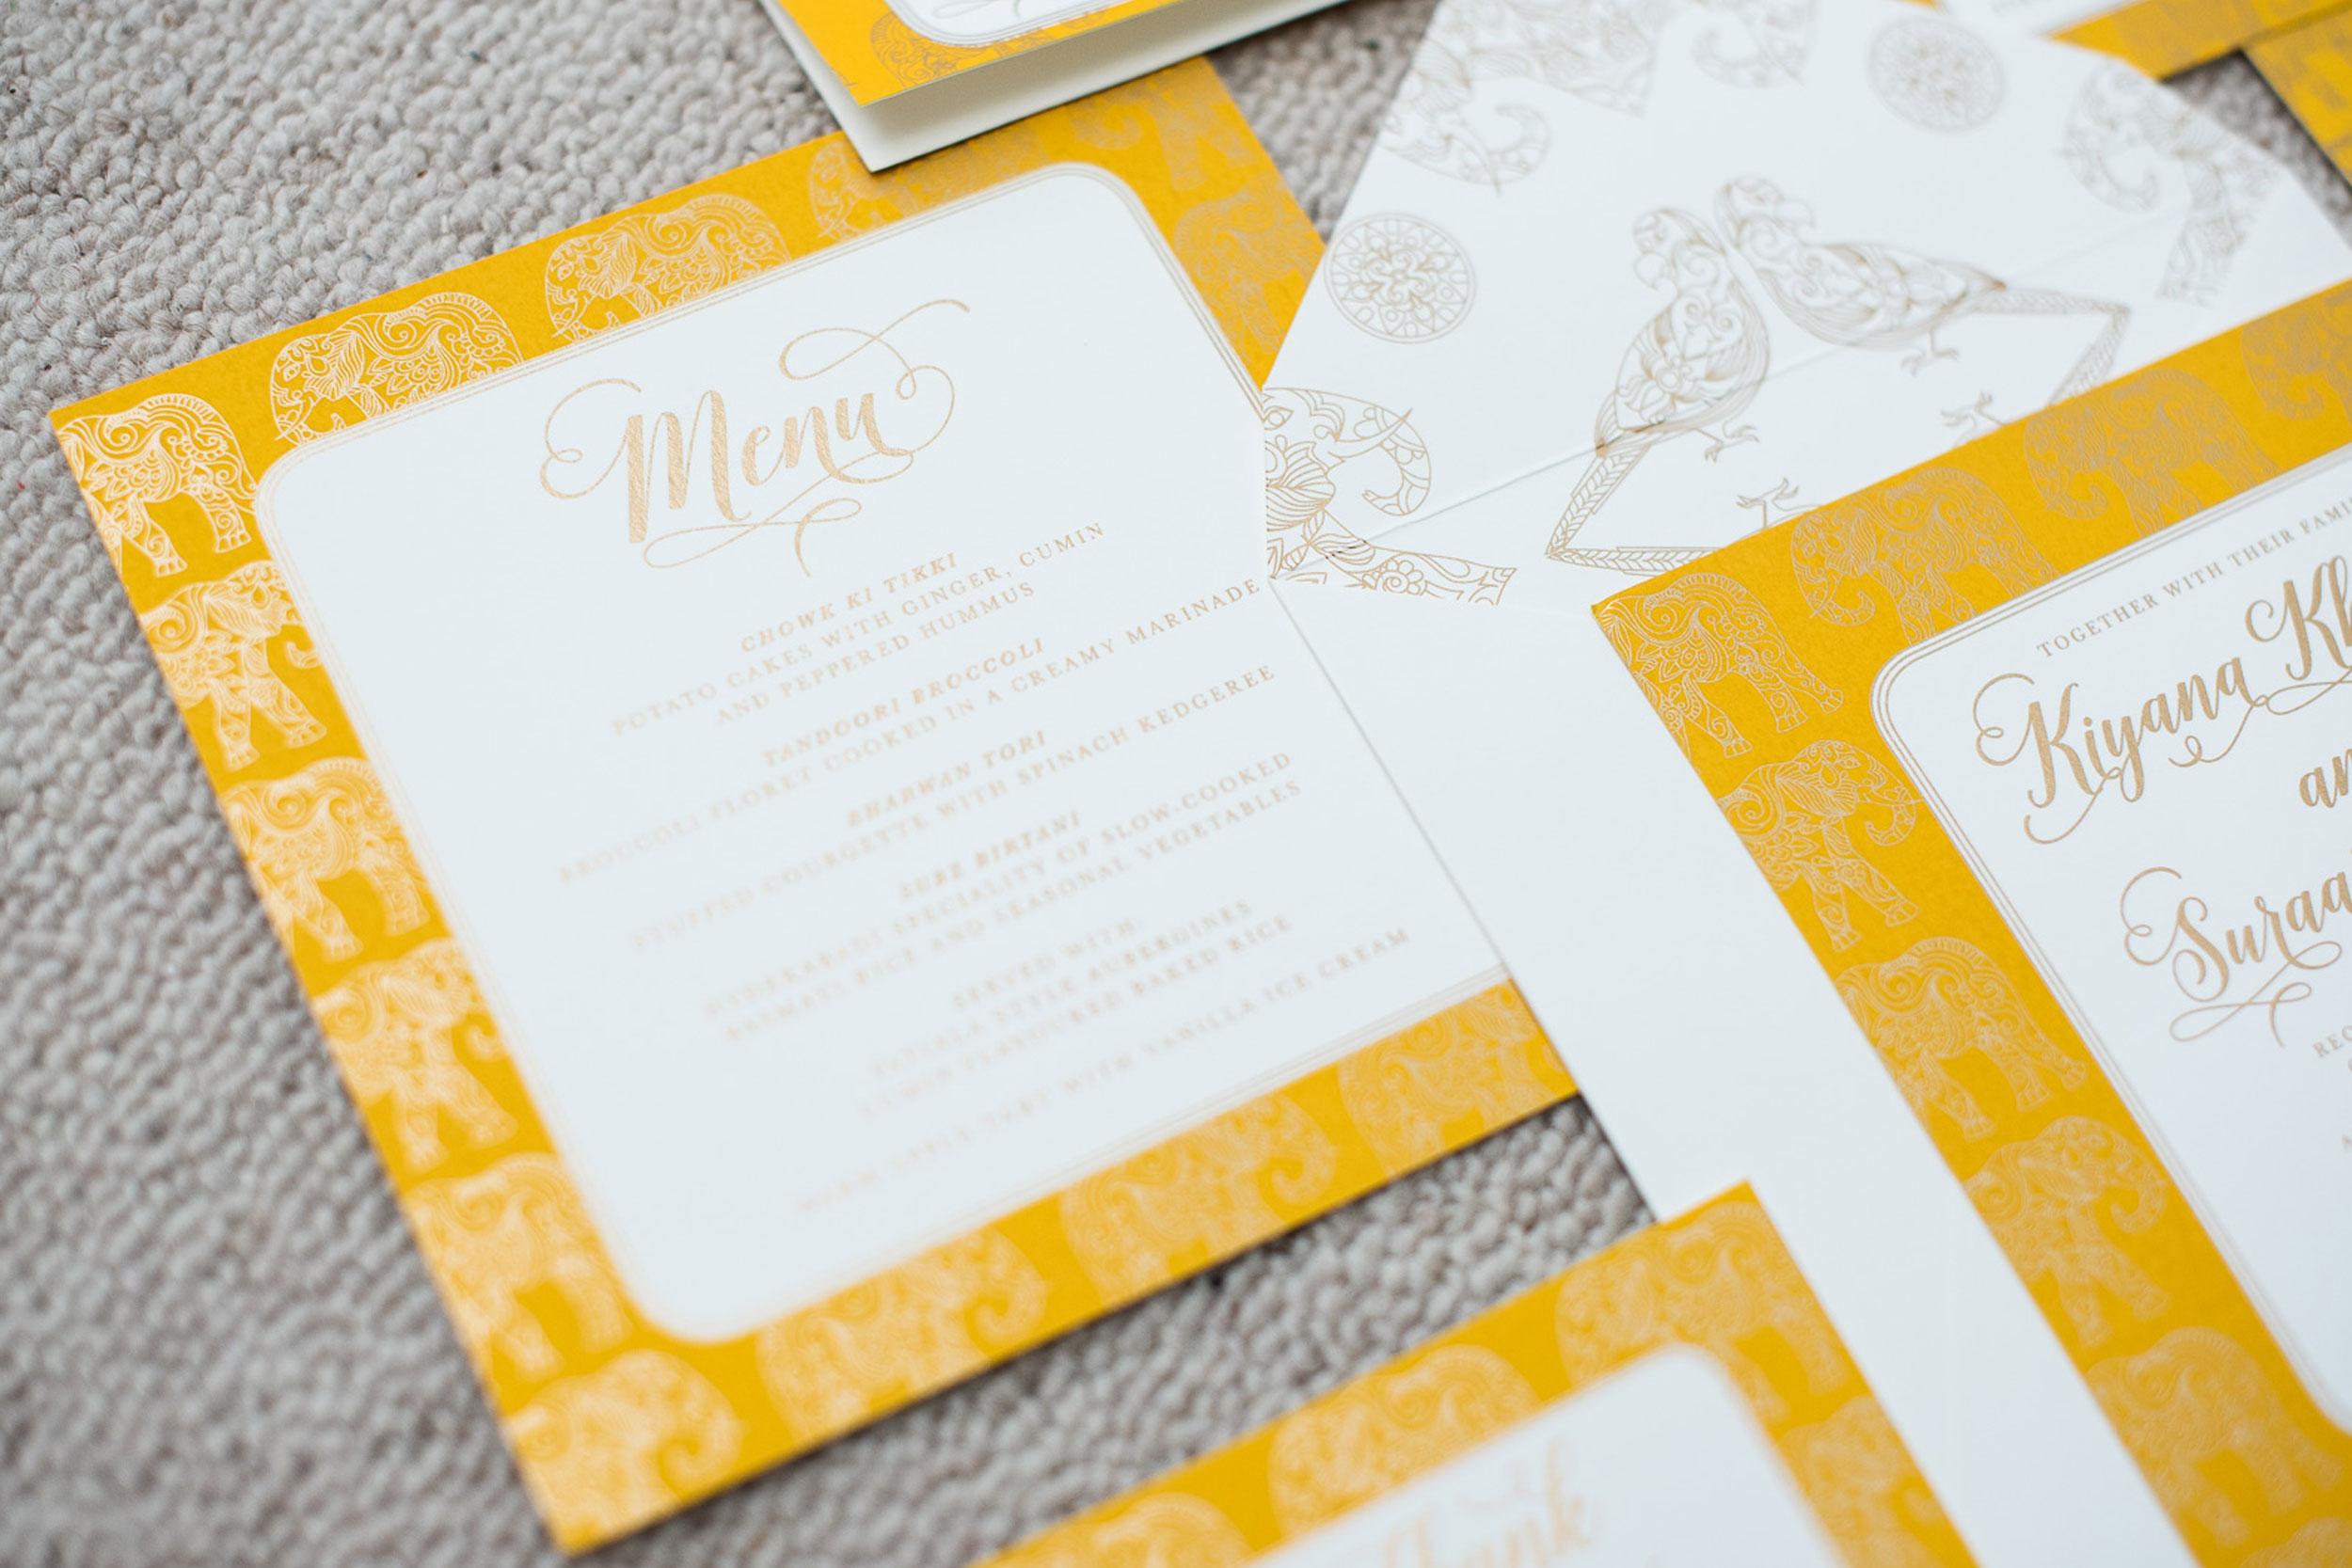 trio-of-life-gold-elephant-menu-wedding-invitation.jpg